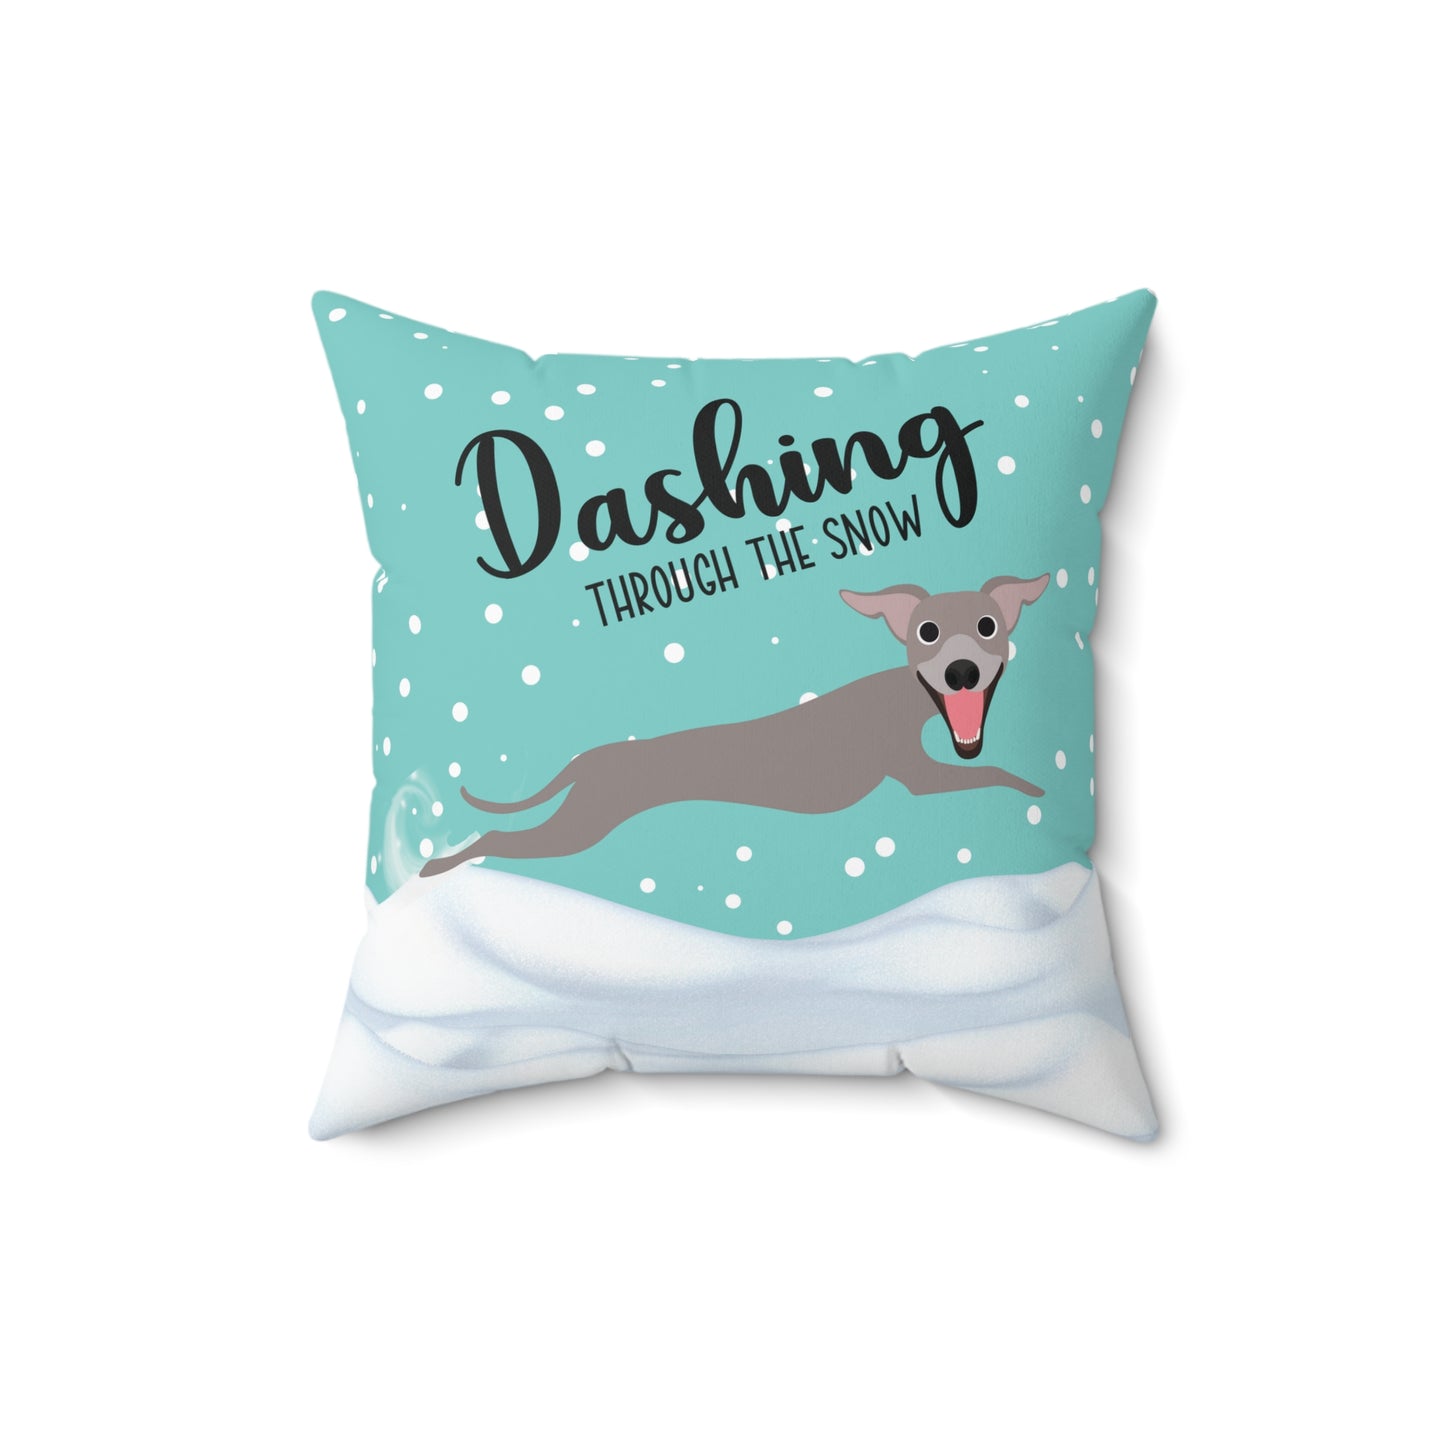 Dashing Through the Snow Whippet Italian Greyhound Faux Suede Square Pillow